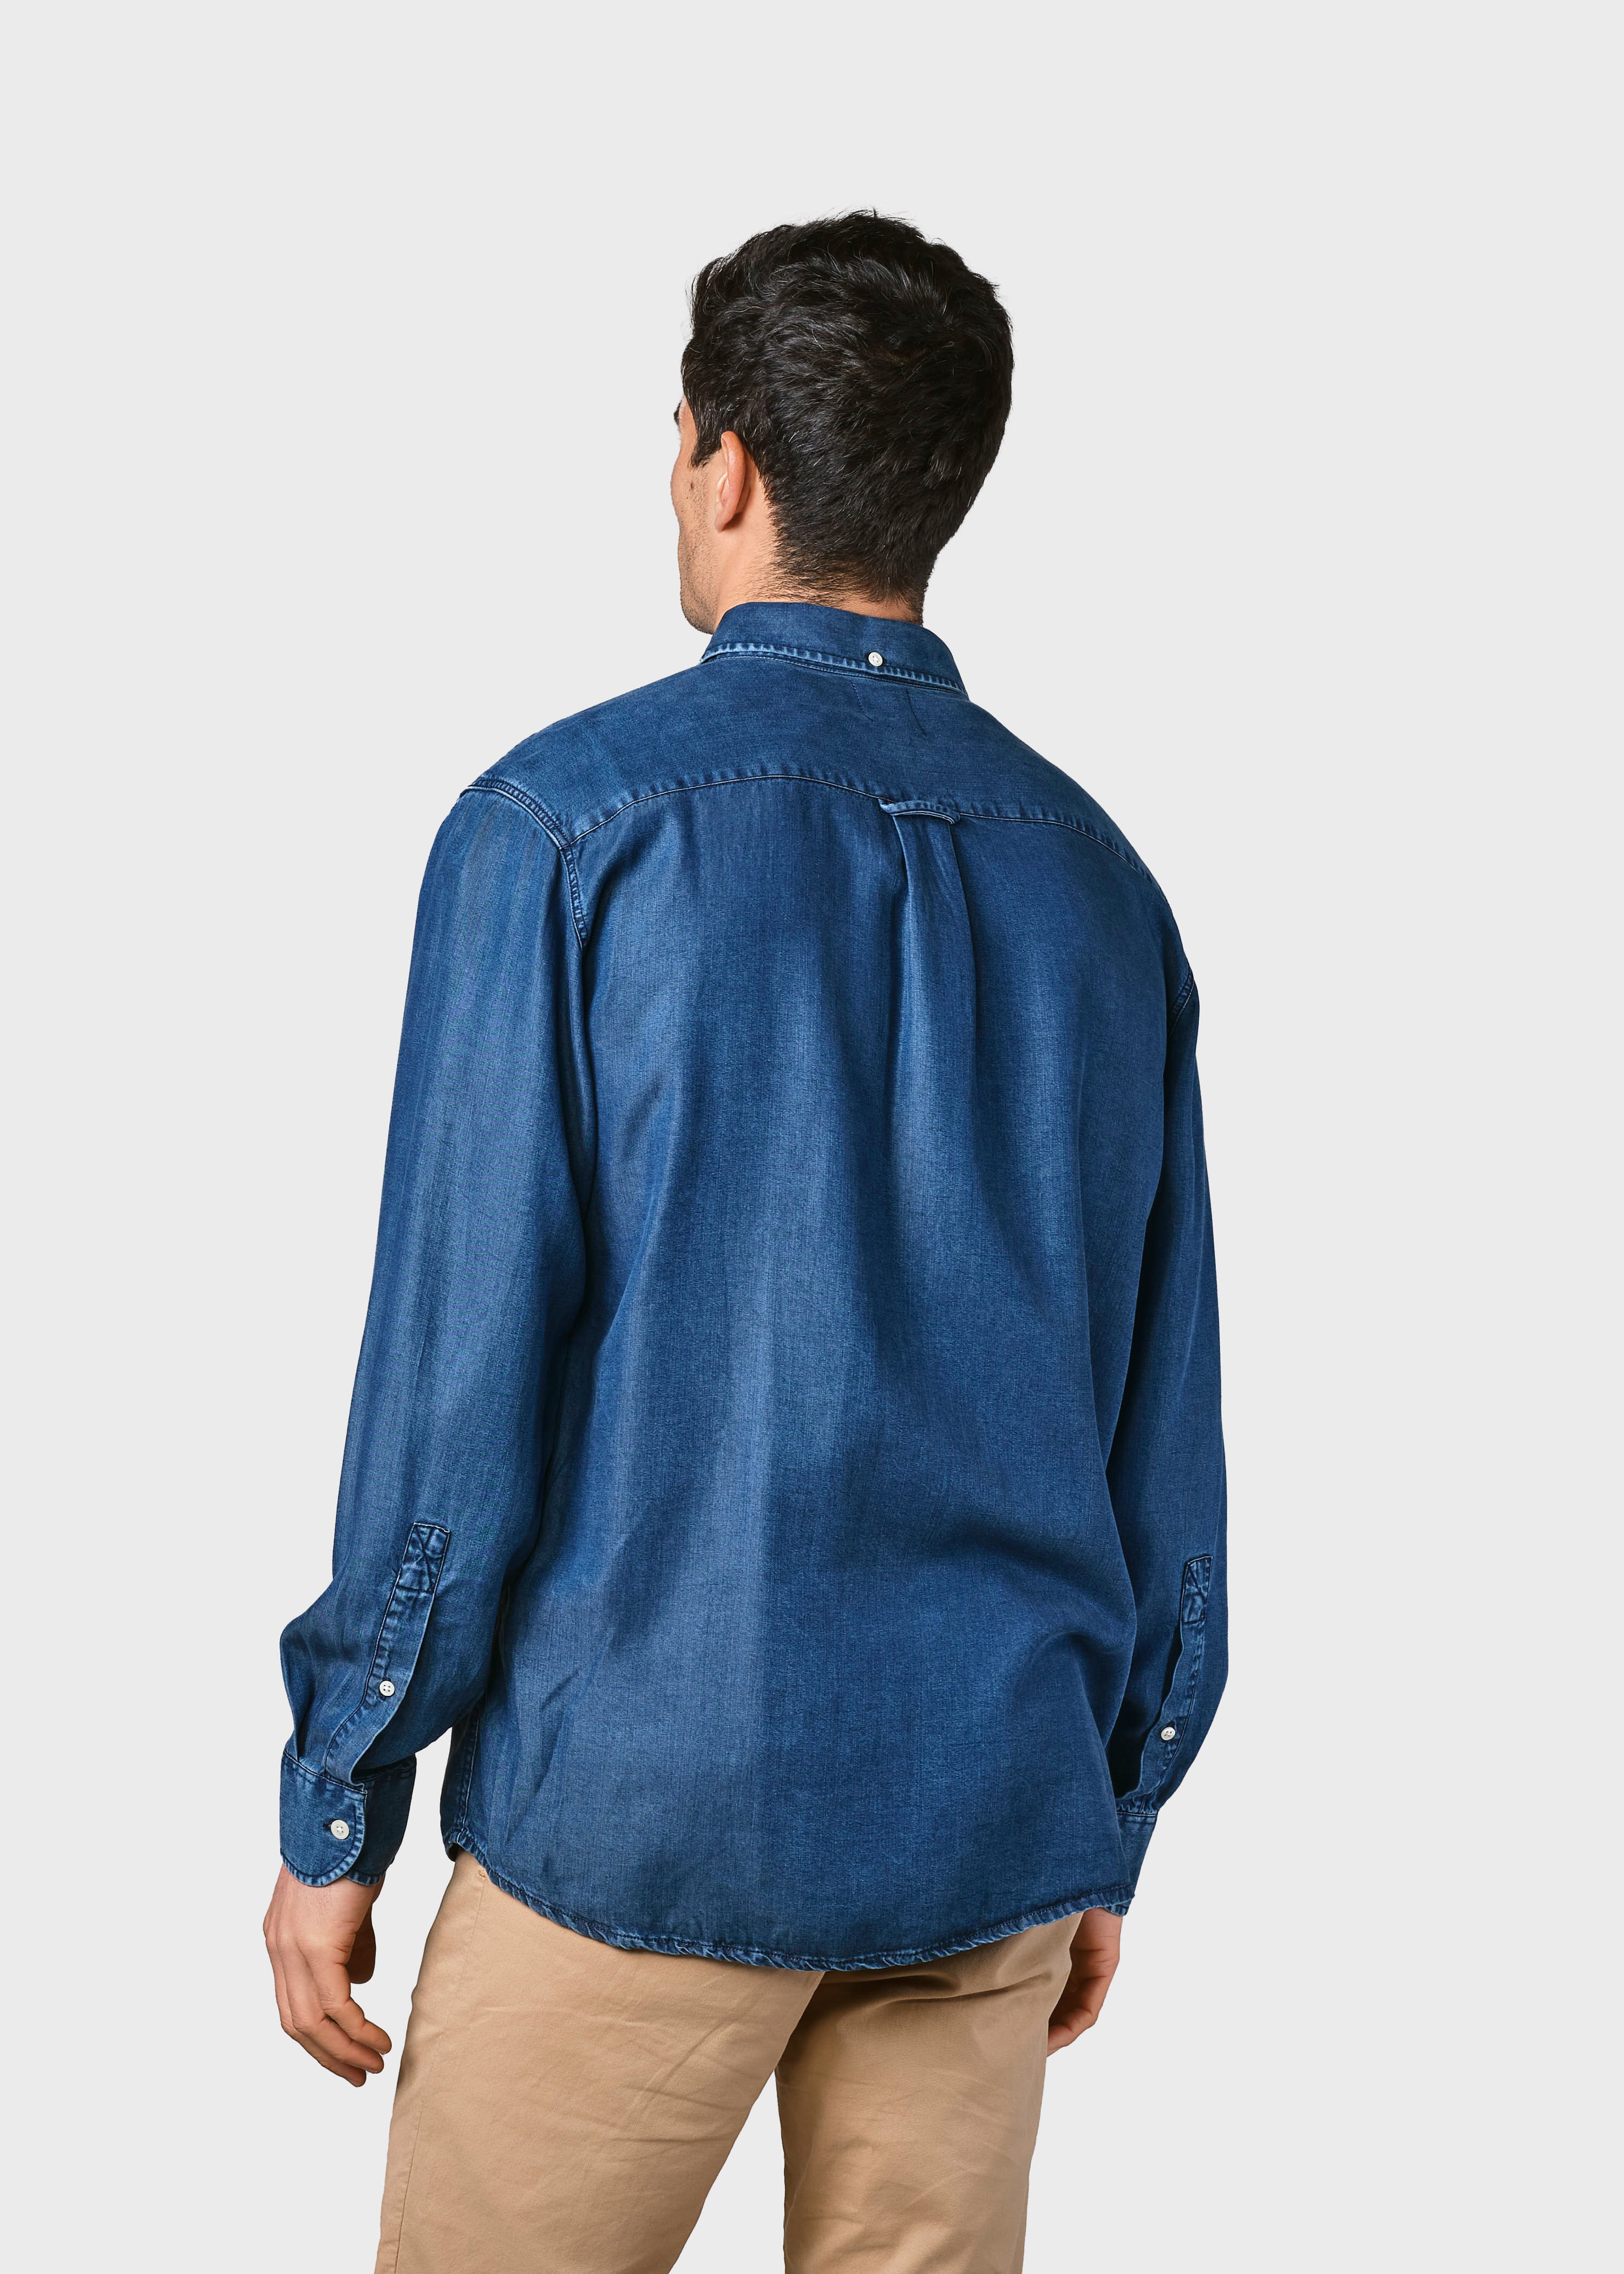 Men's caual shirt in lyocell Benjamin blue jeans